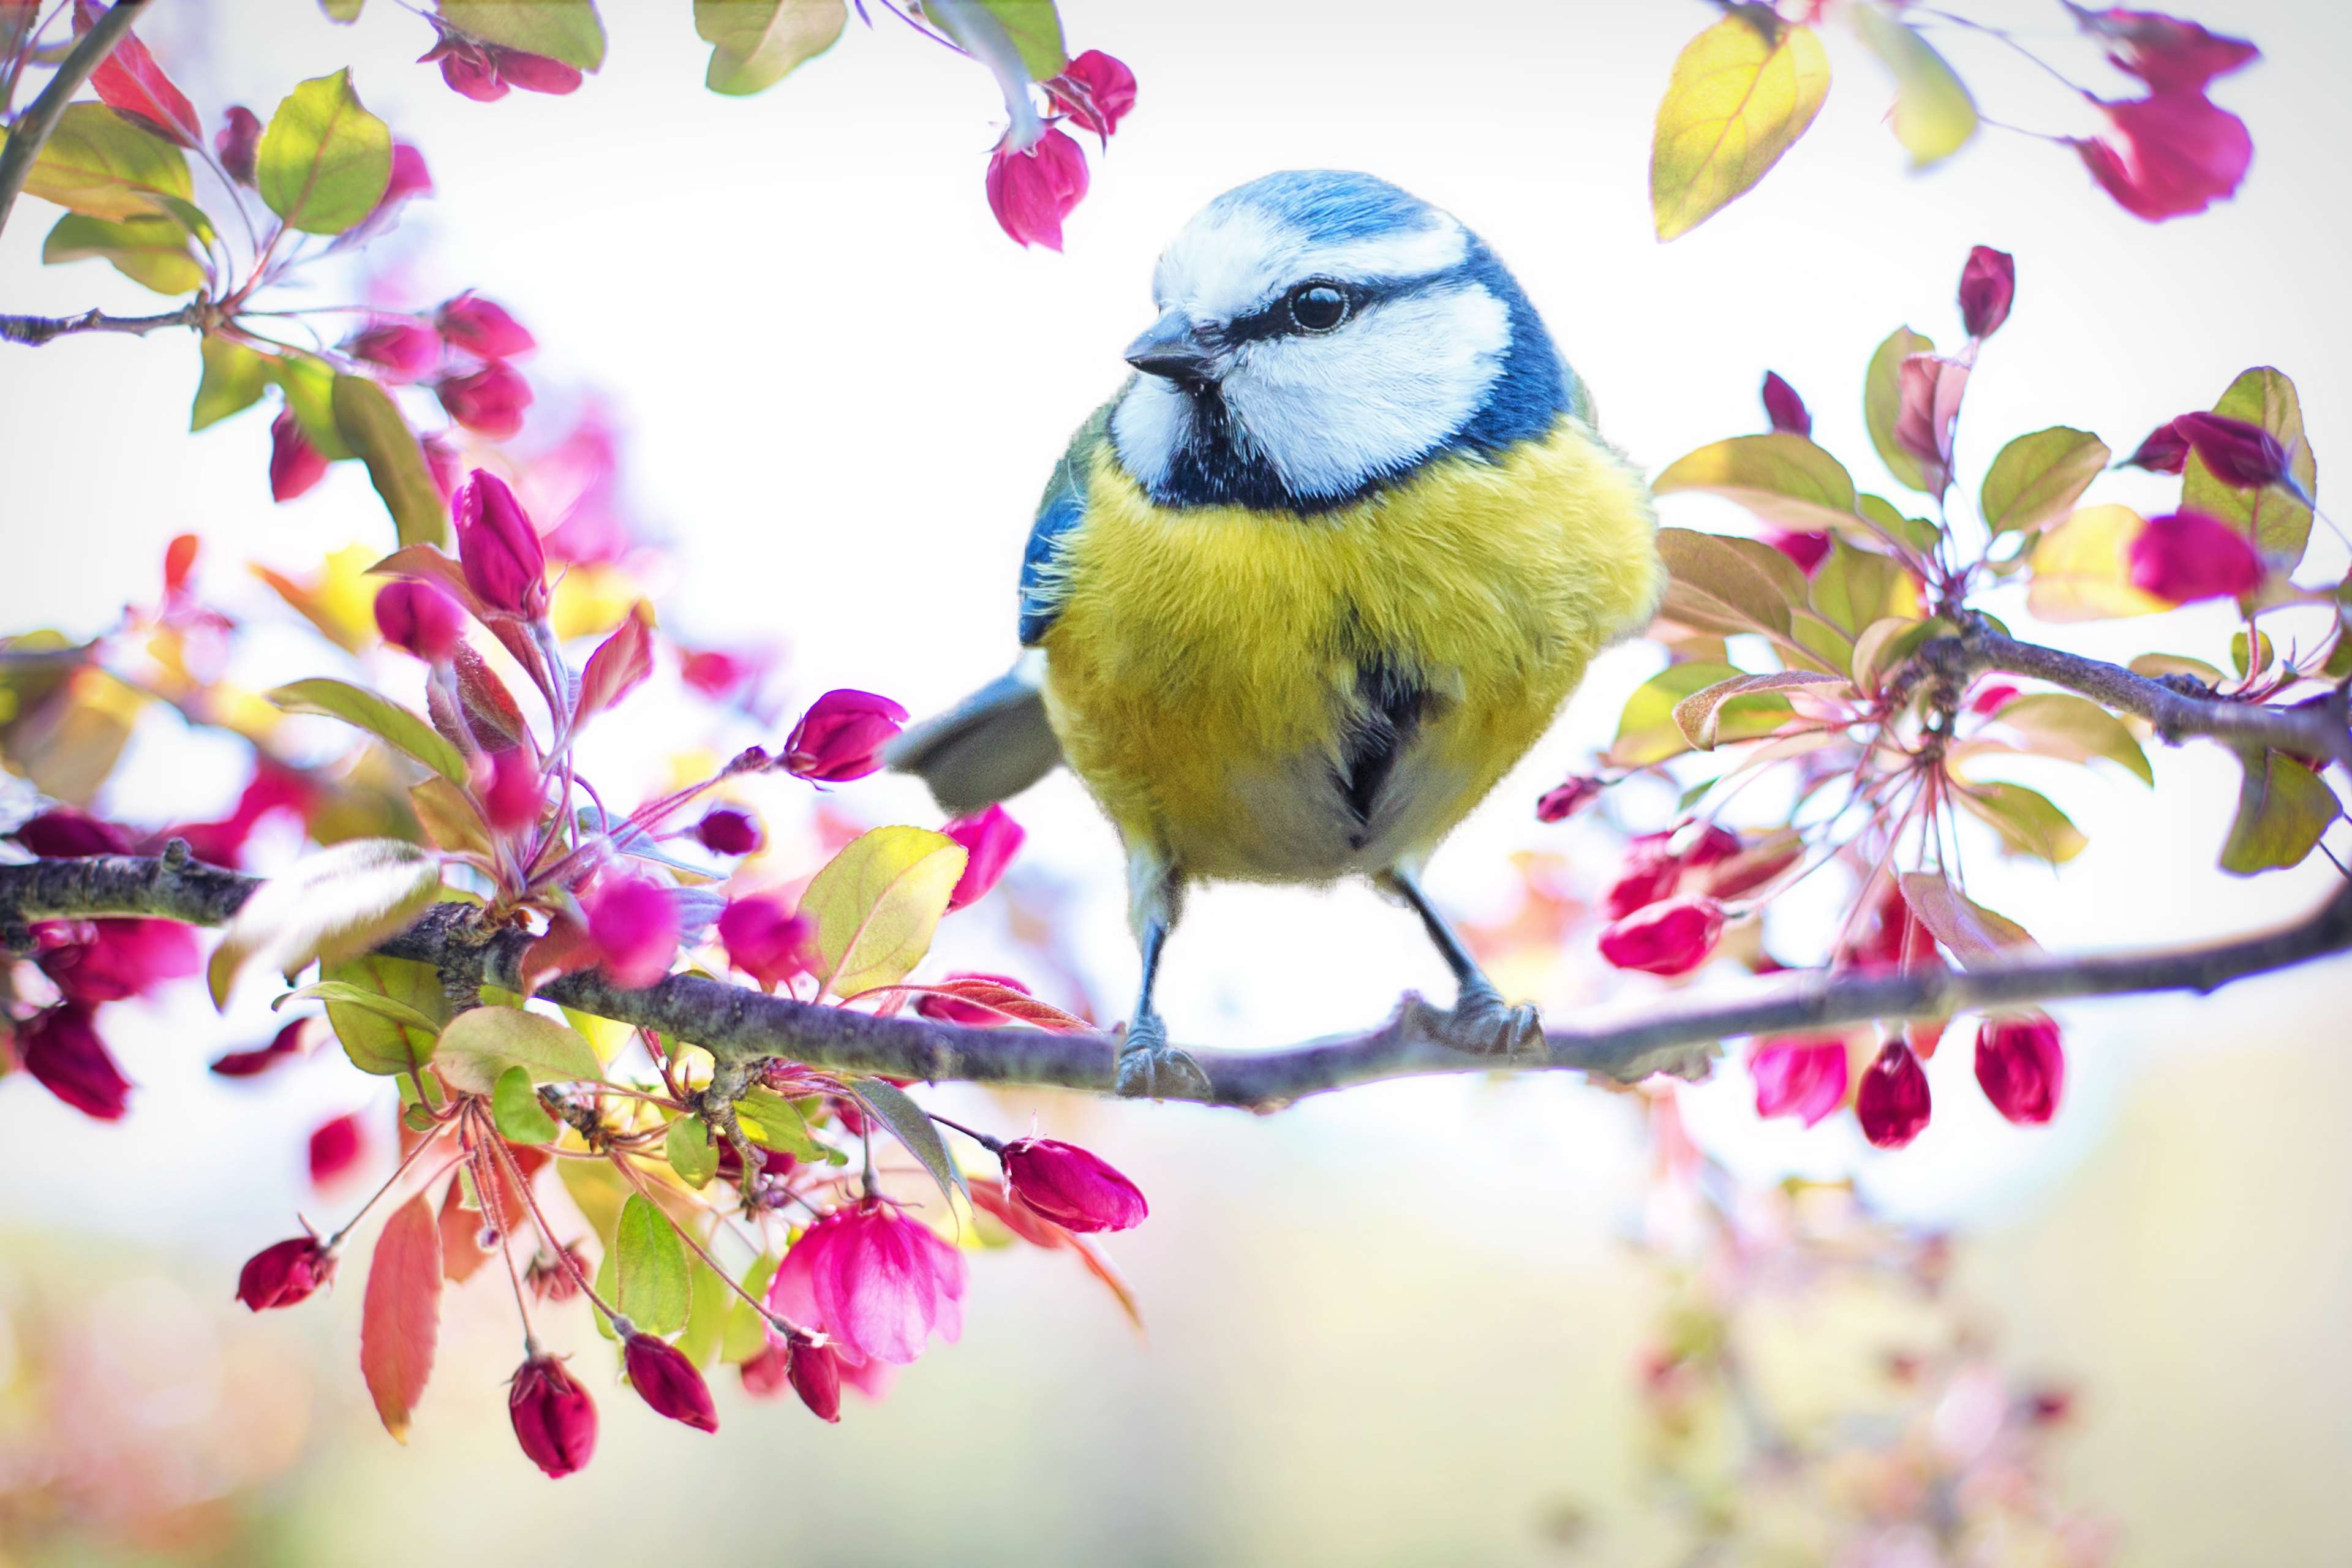 spring bird 1080P, 2k, 4k HD wallpaper, background free download